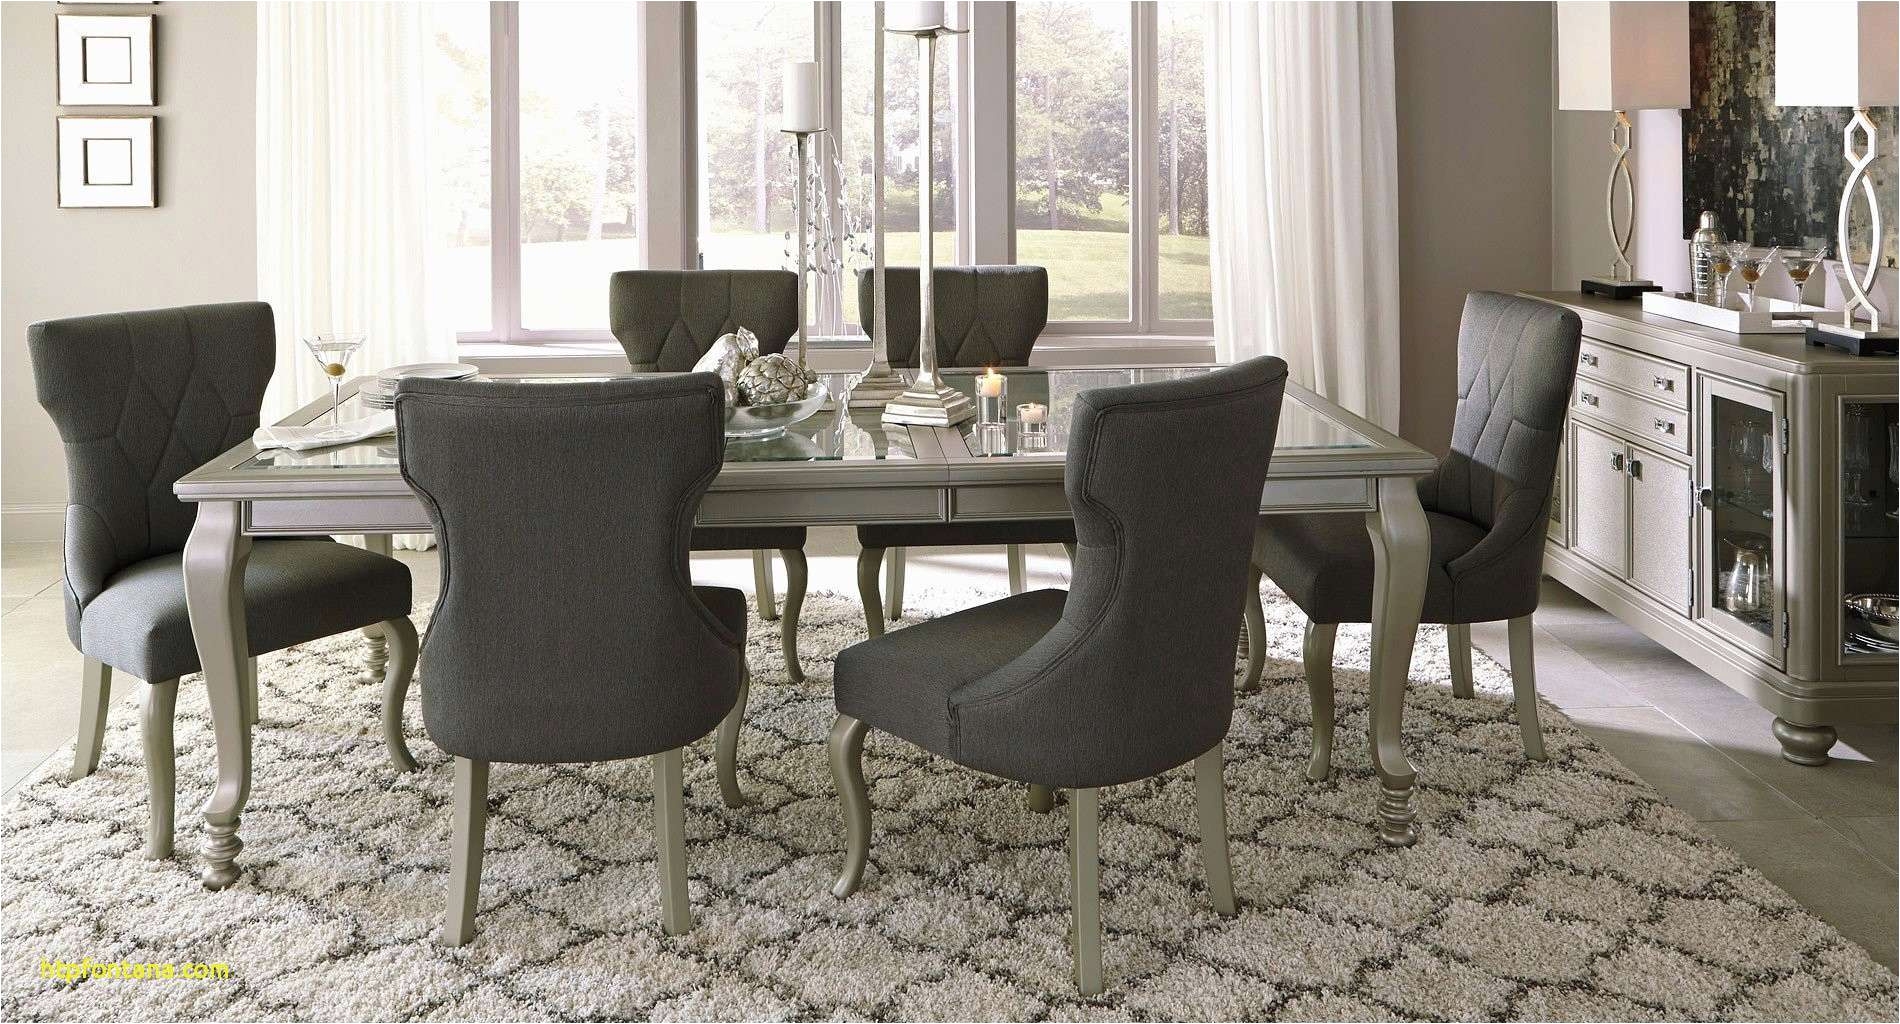 cape cod kitchen design fresh modern living room and kitchen design fresh shaker chairs 0d design